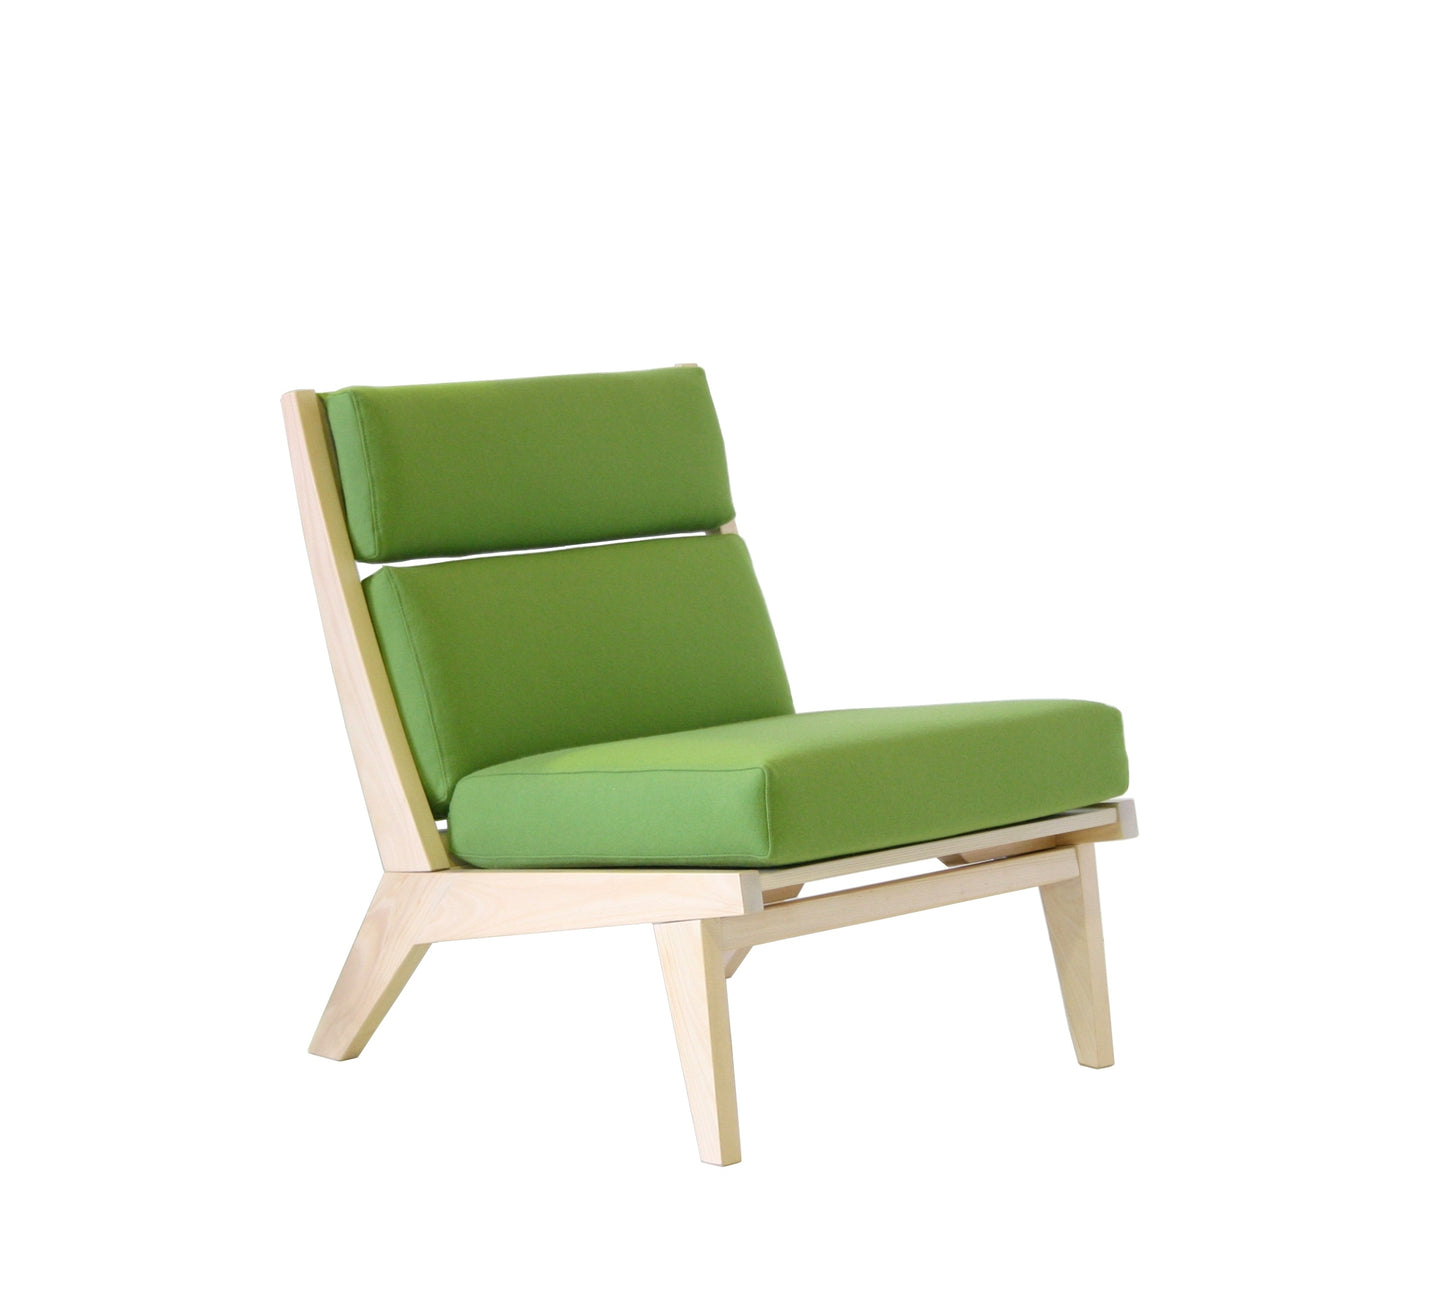 trans-form-it lounge chair by Deka